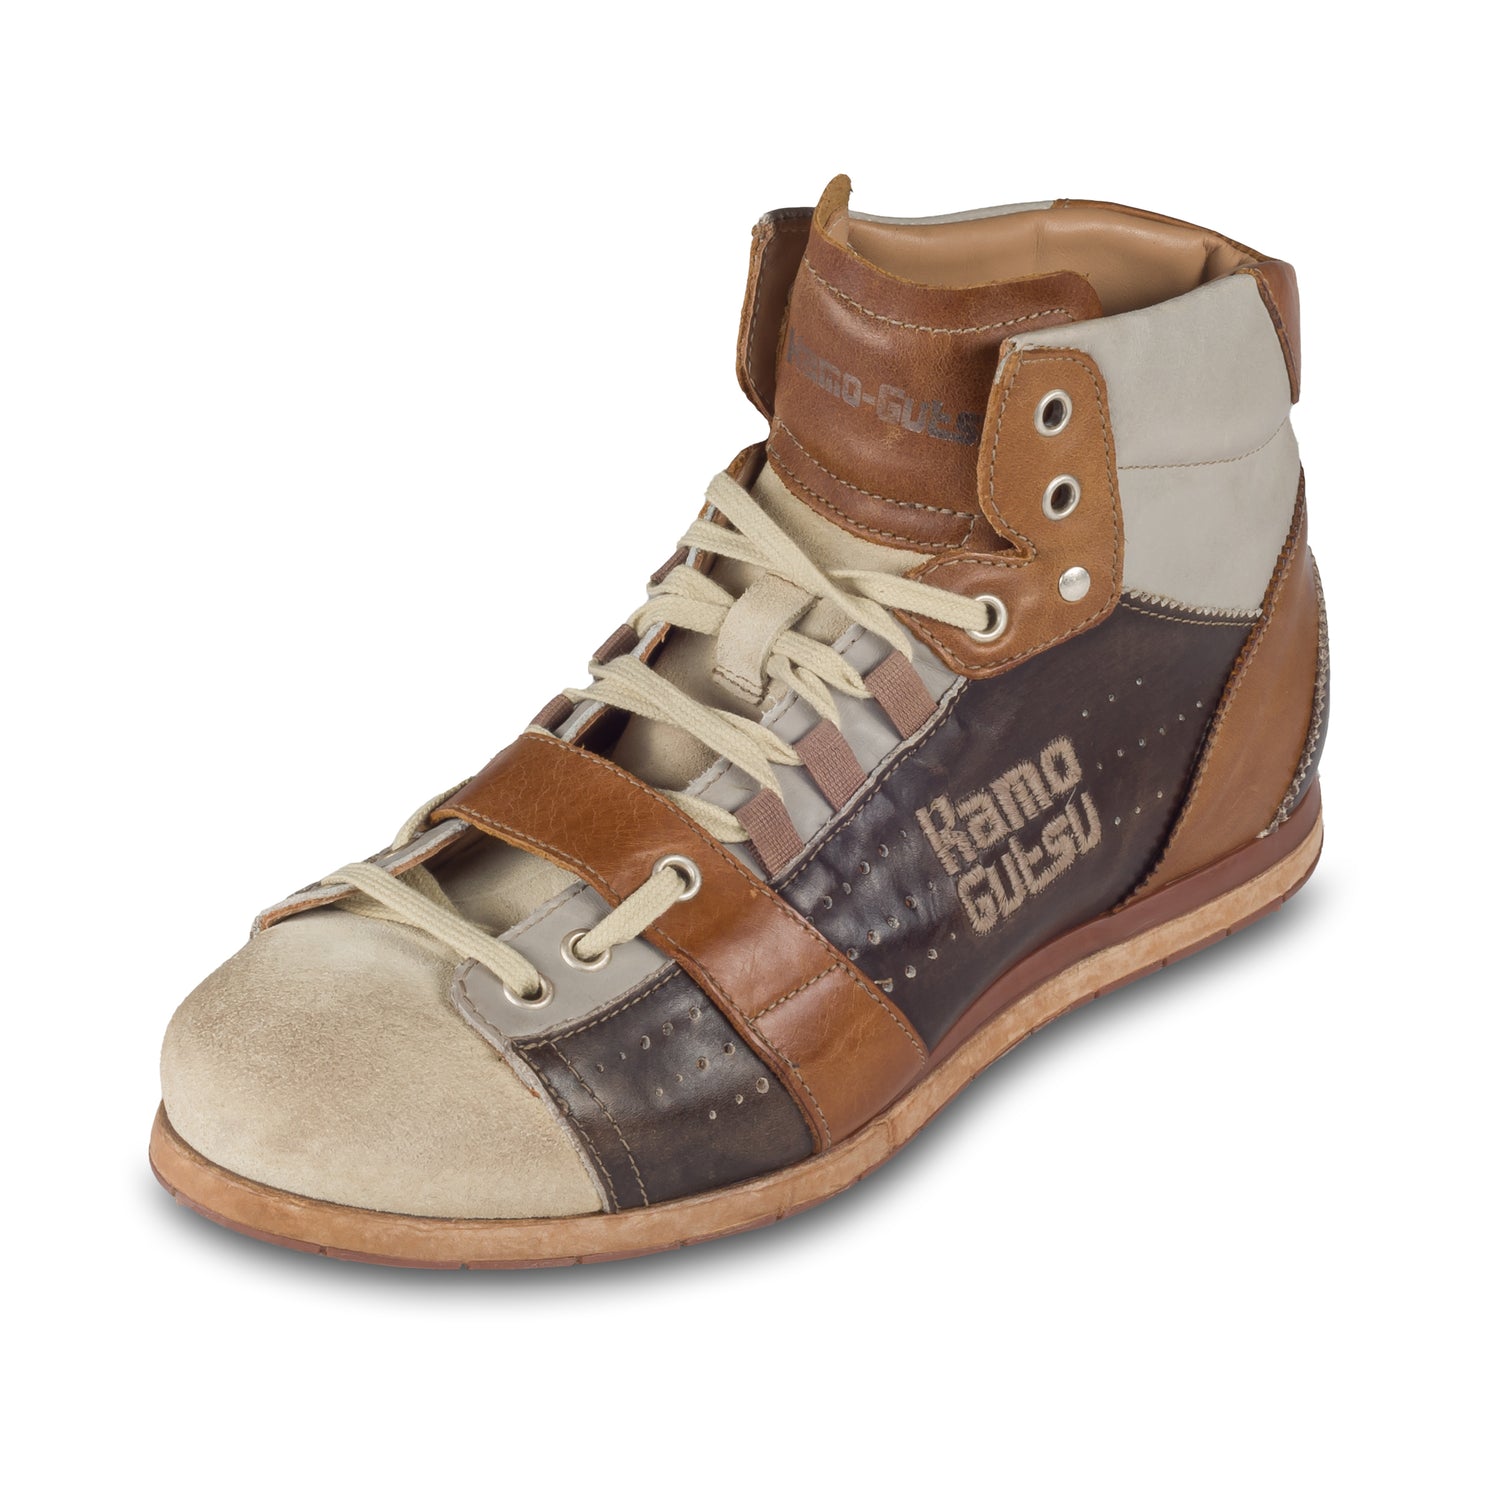 KAMO-GUTSU Herren Leder Sneaker Stiefel, braun/beige, Retro-Optik, High-Top, Modell TIFO-105 panna + pietra, Handgefertigt in Italien. Schräge Ansicht linker Schuh.